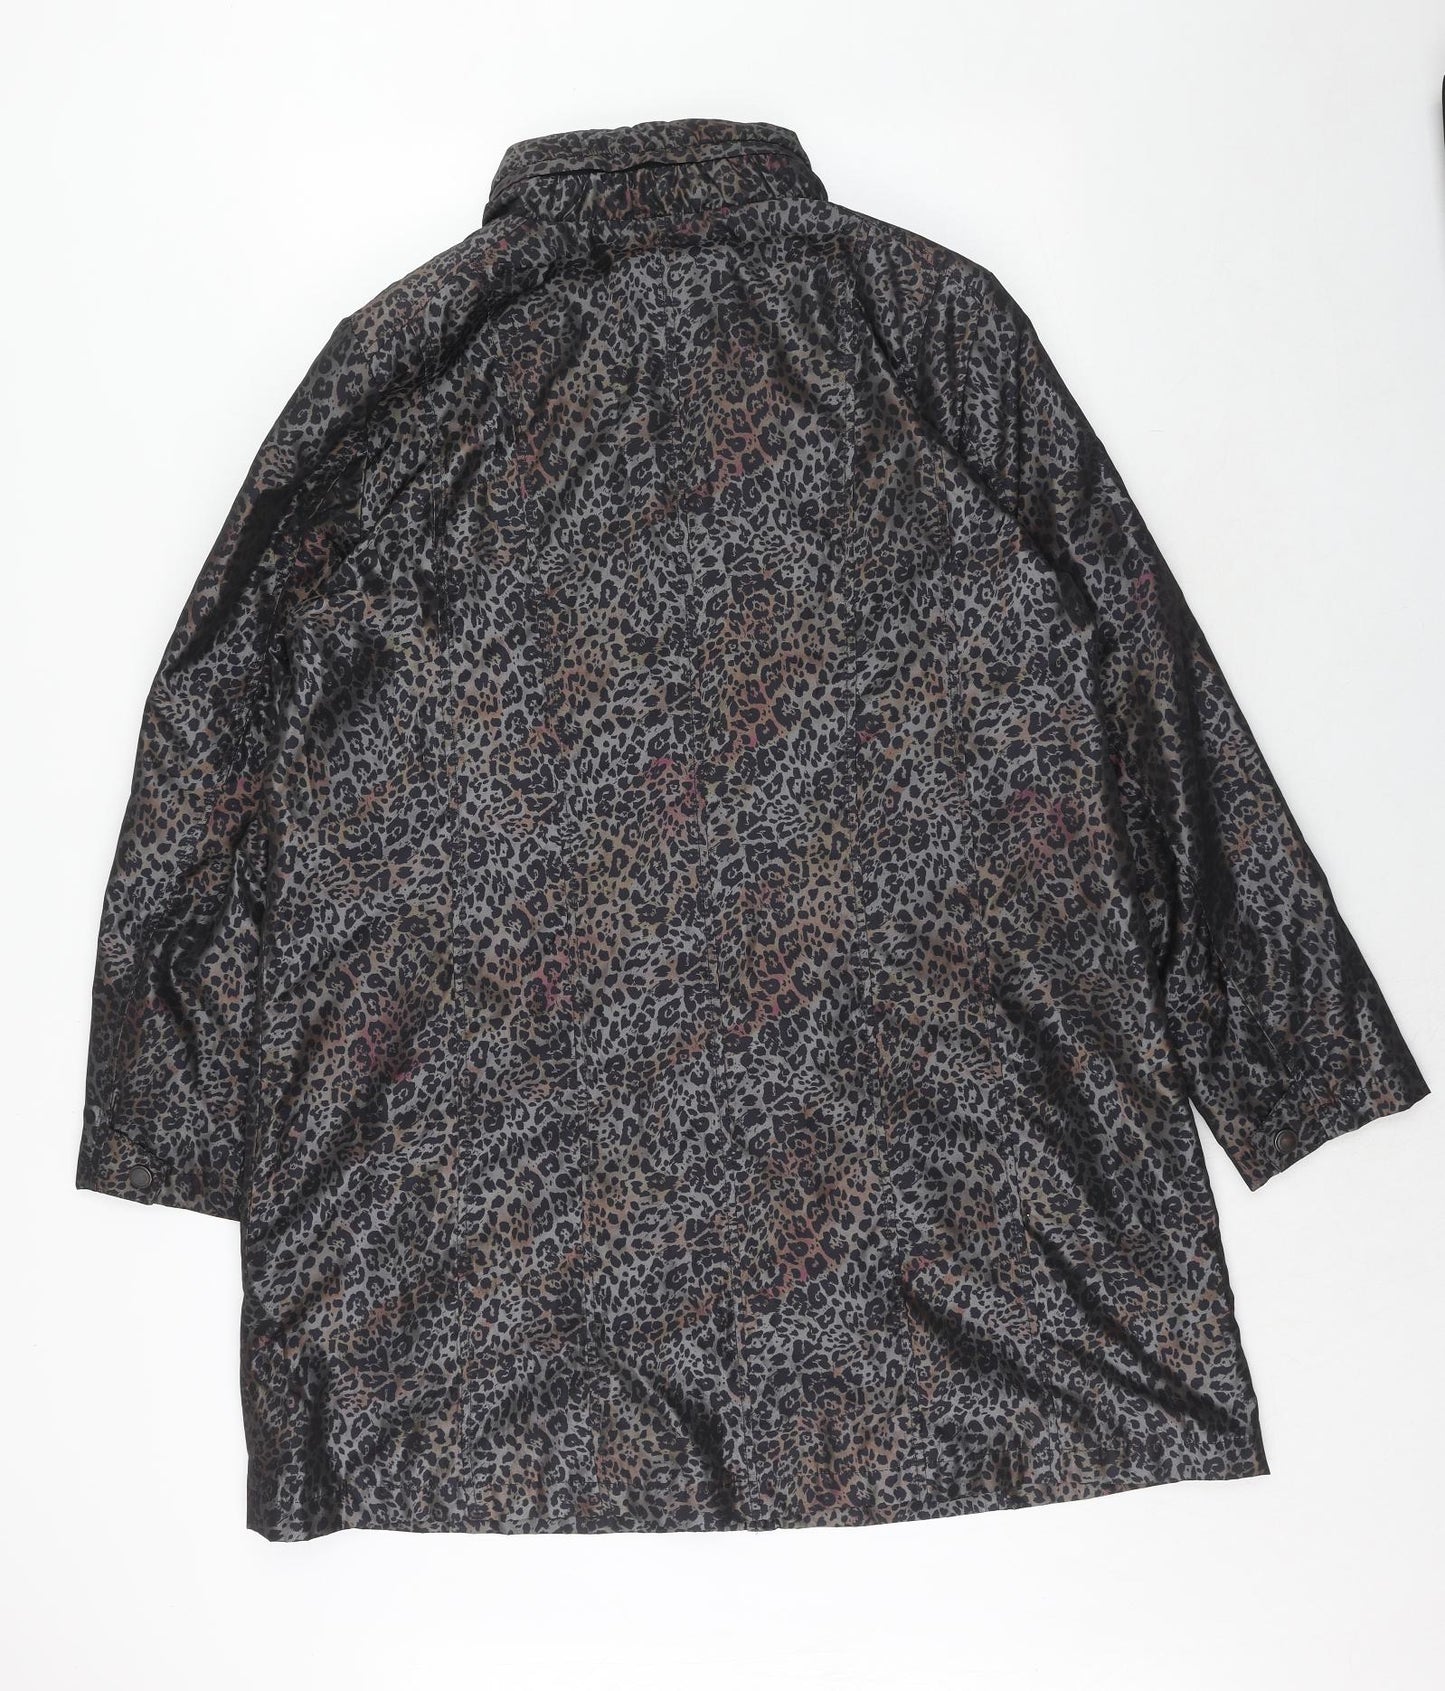 Klass Womens Grey Animal Print Jacket Size L Zip - Leopard Print